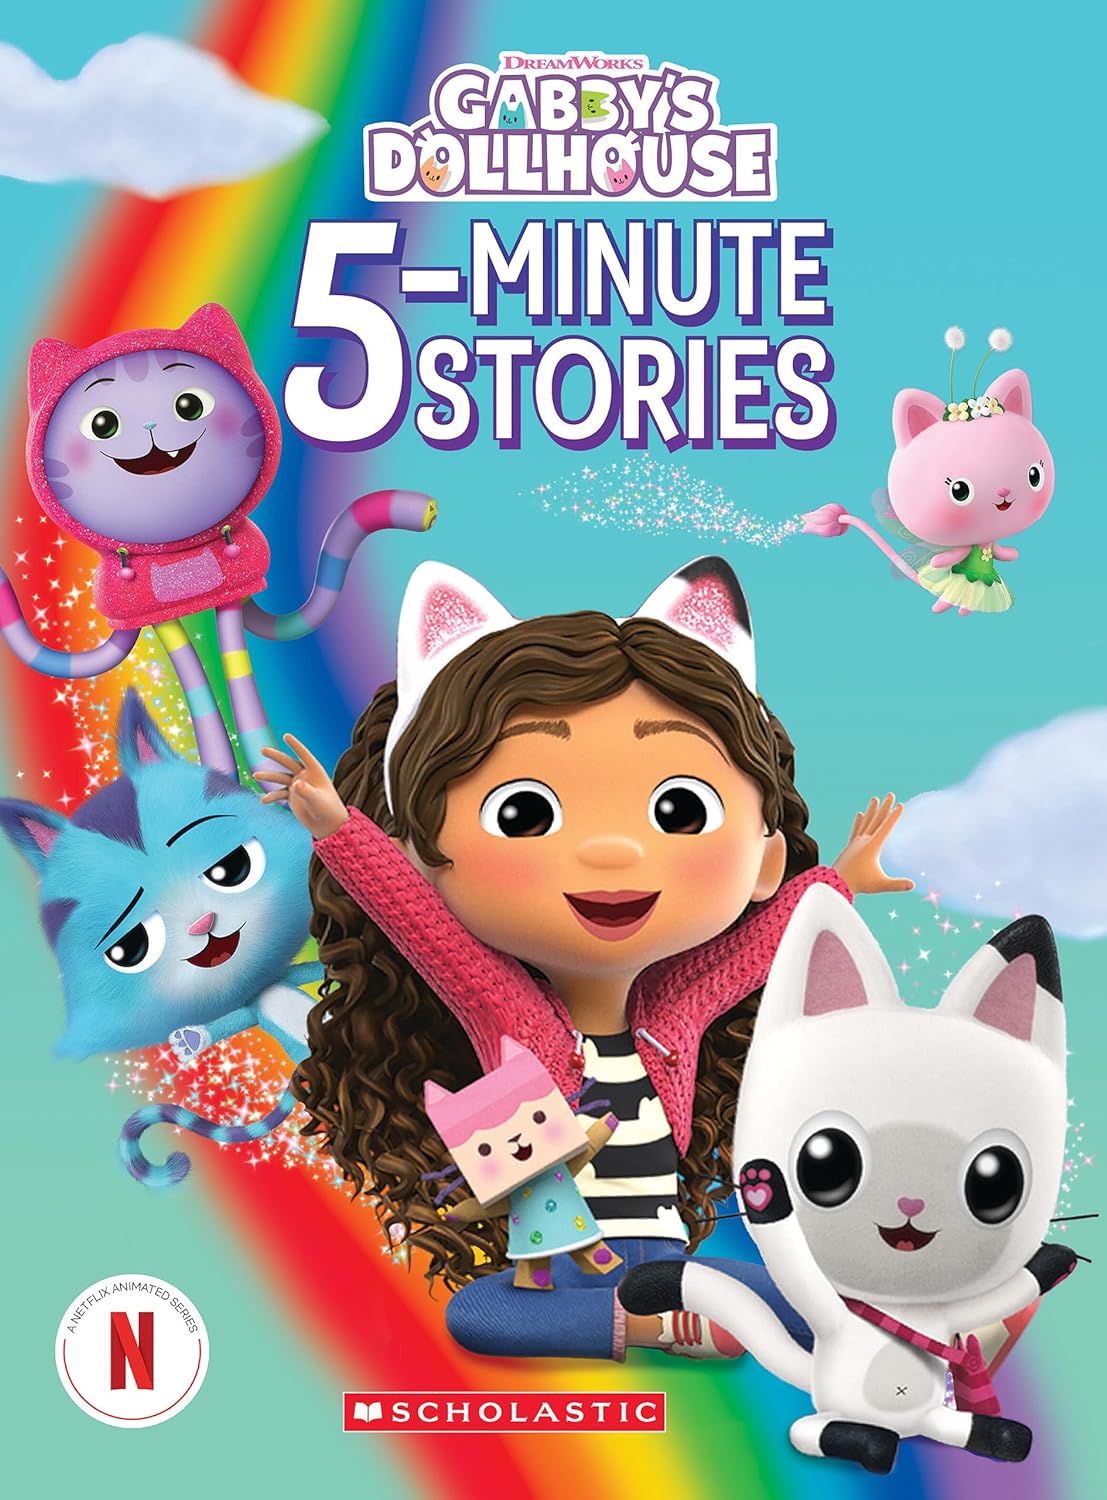 5 Minute Stories: Gabby's Dollhouse